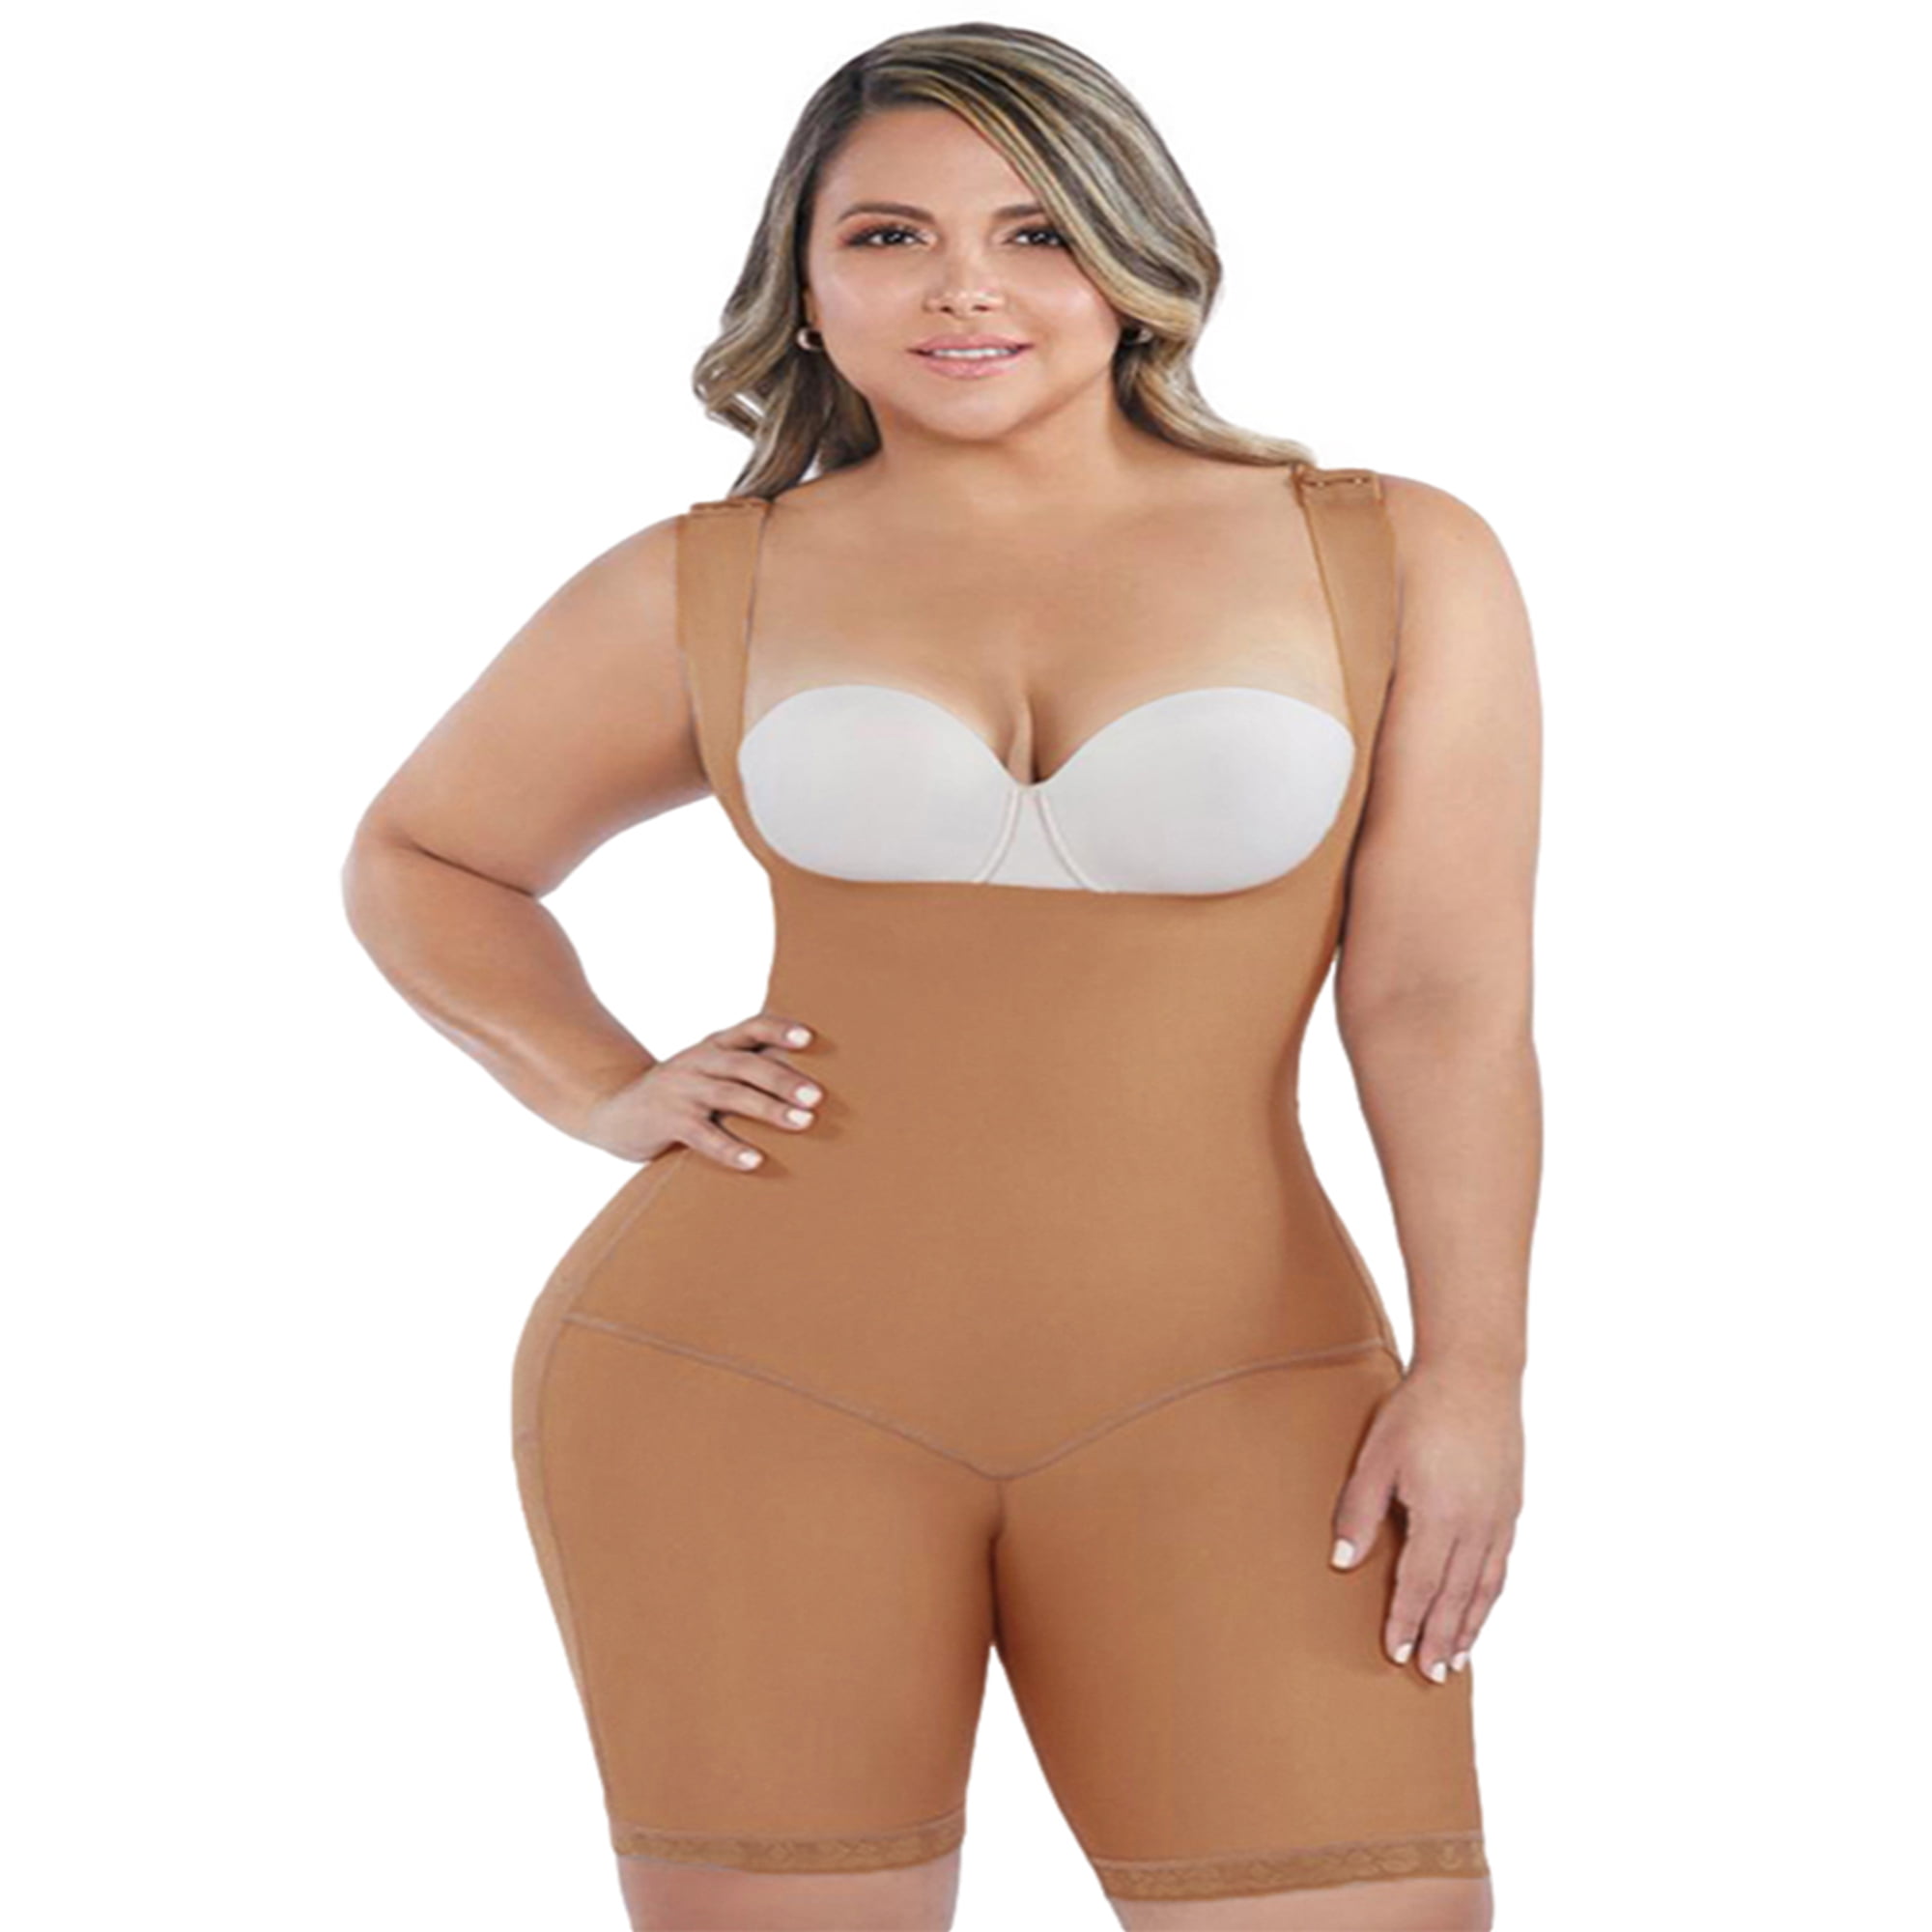 JOSHINE Post Op Compression Garment for Women Faja Butt Lifter Shapewear XL  